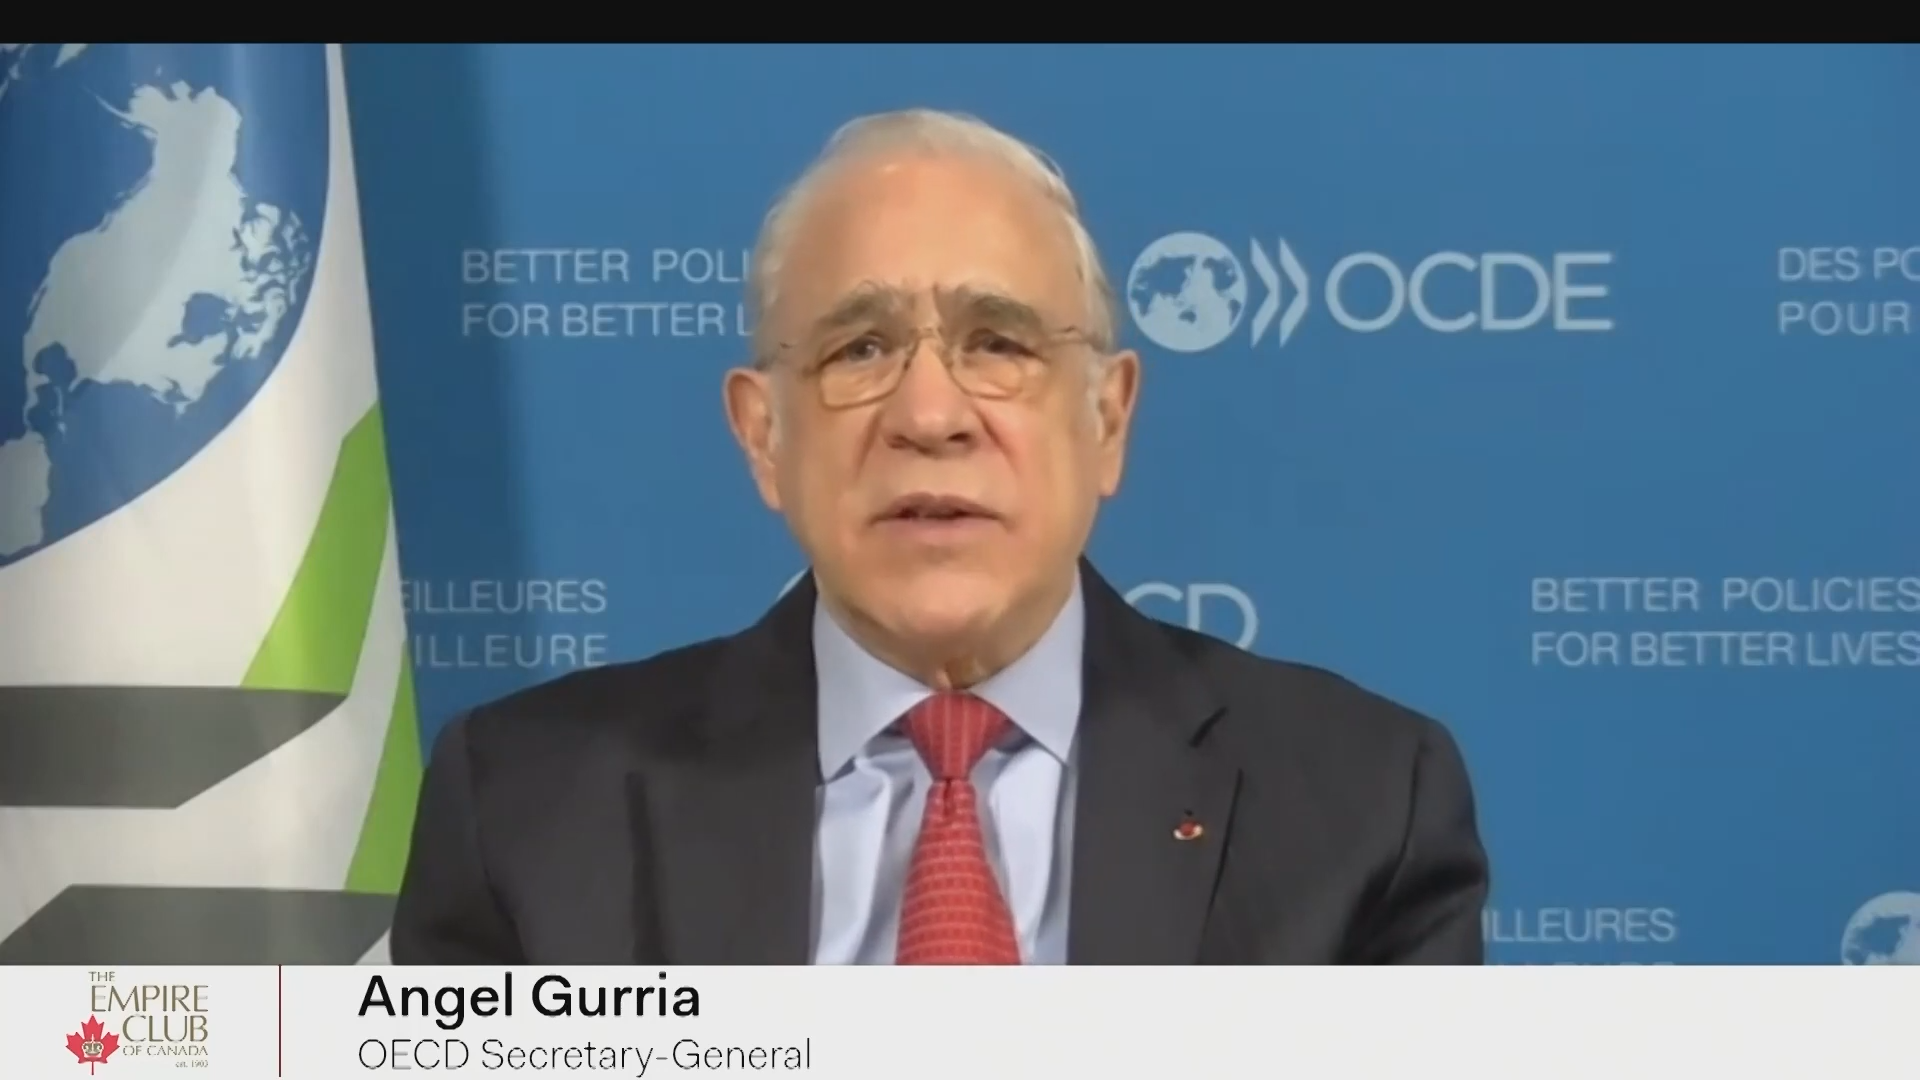 Angel Gurria, OECD Secretary-General speaking at a virtual event